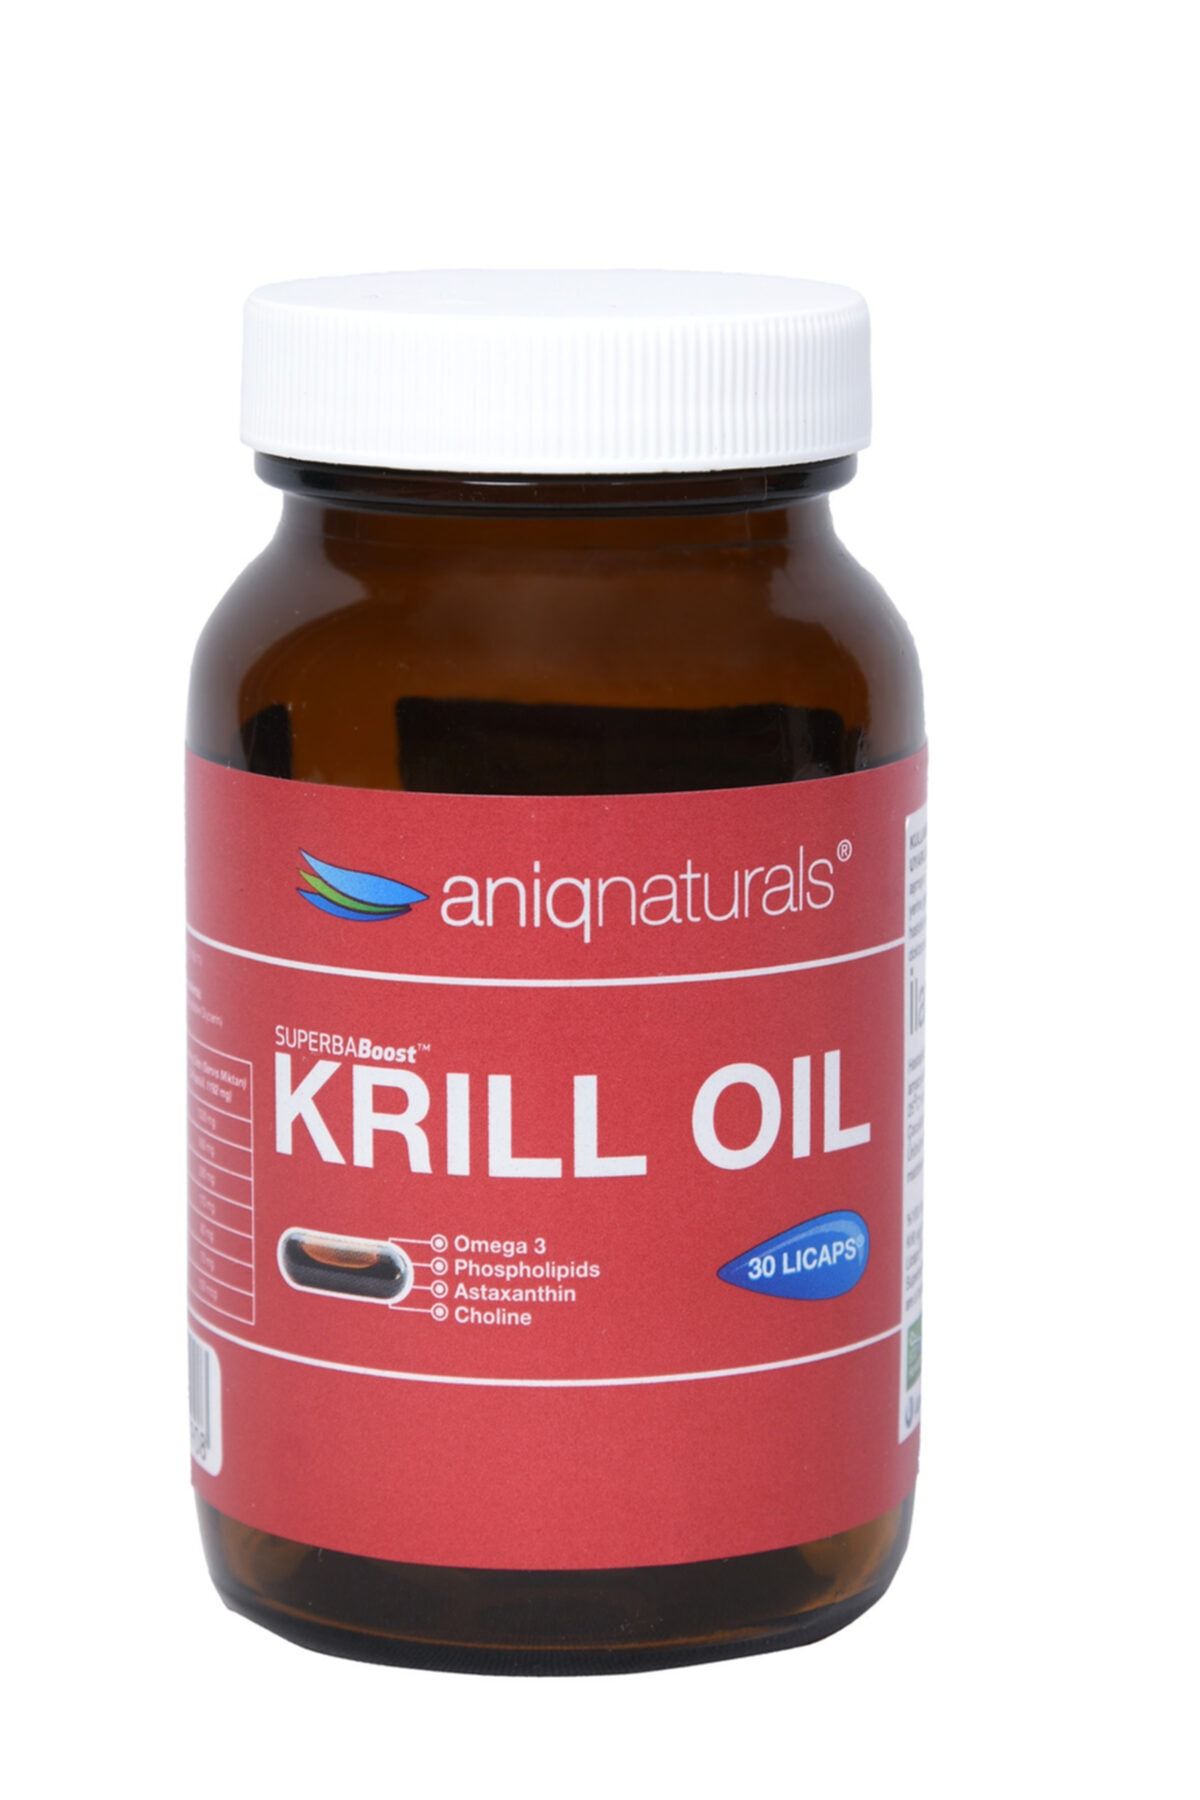 Aniqnaturals Superba Boost Krill Oil 30 Licaps Glass Jar